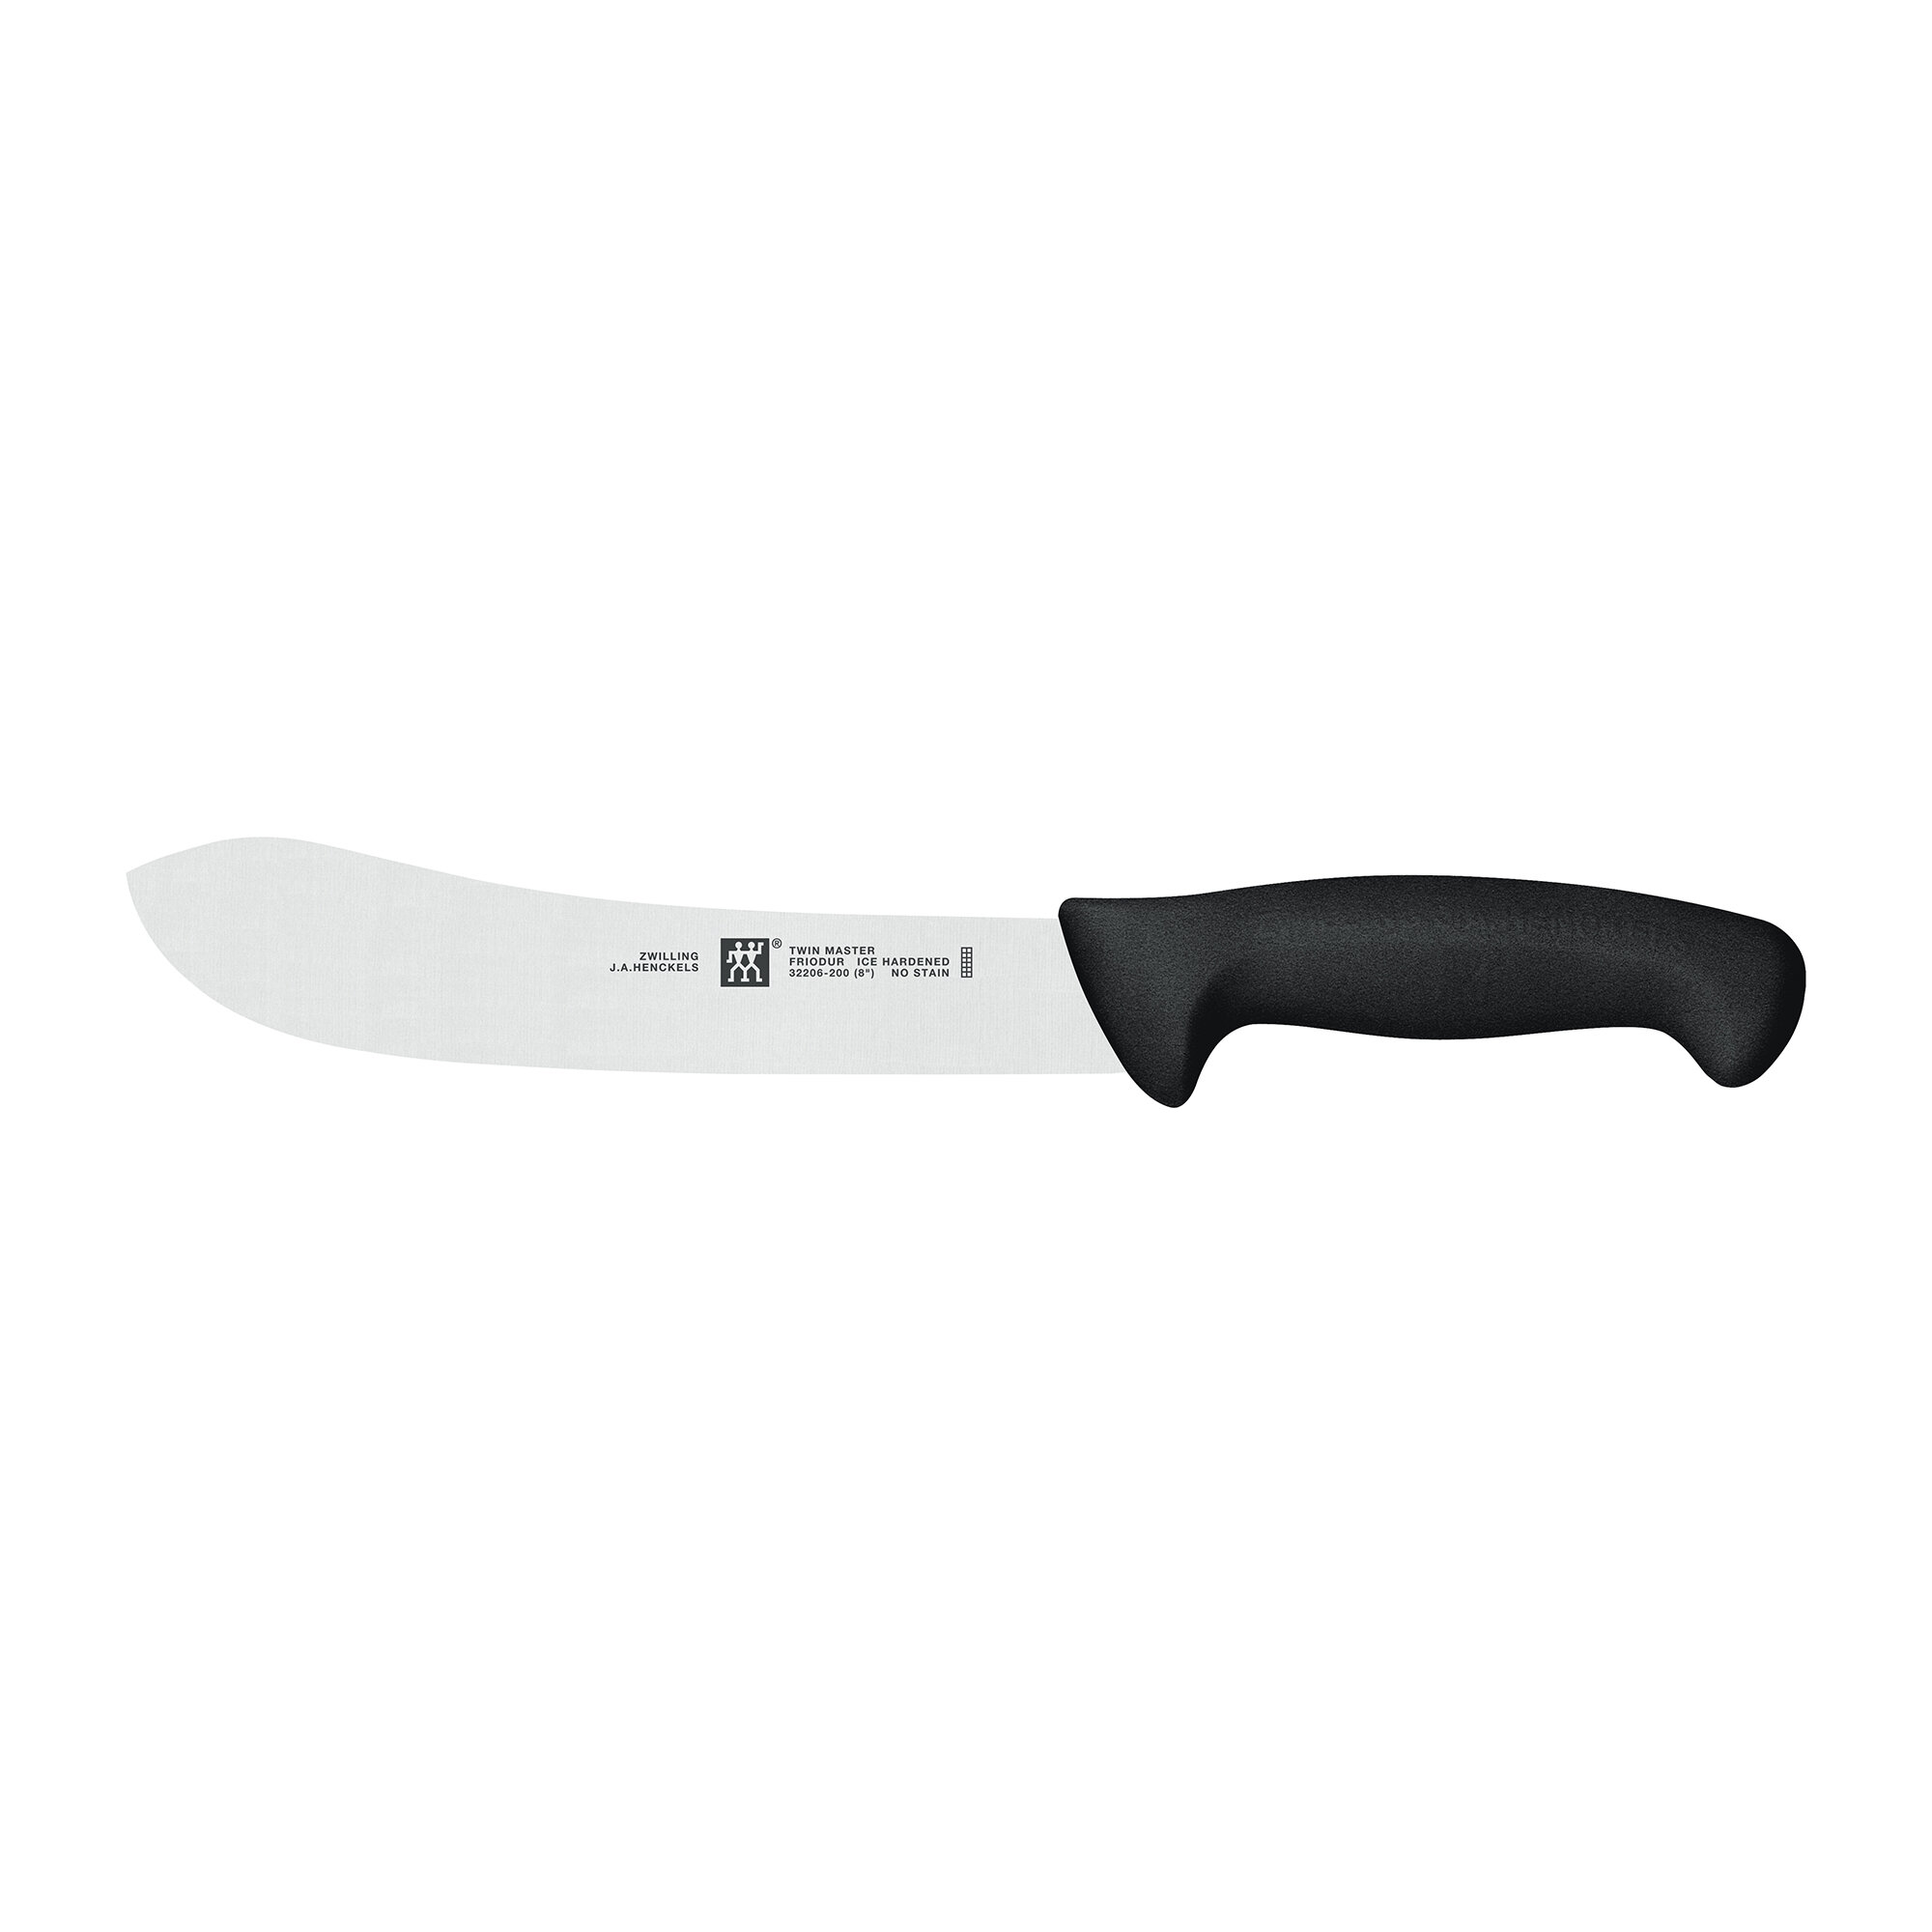 commercial kitchen knives butcher knives for